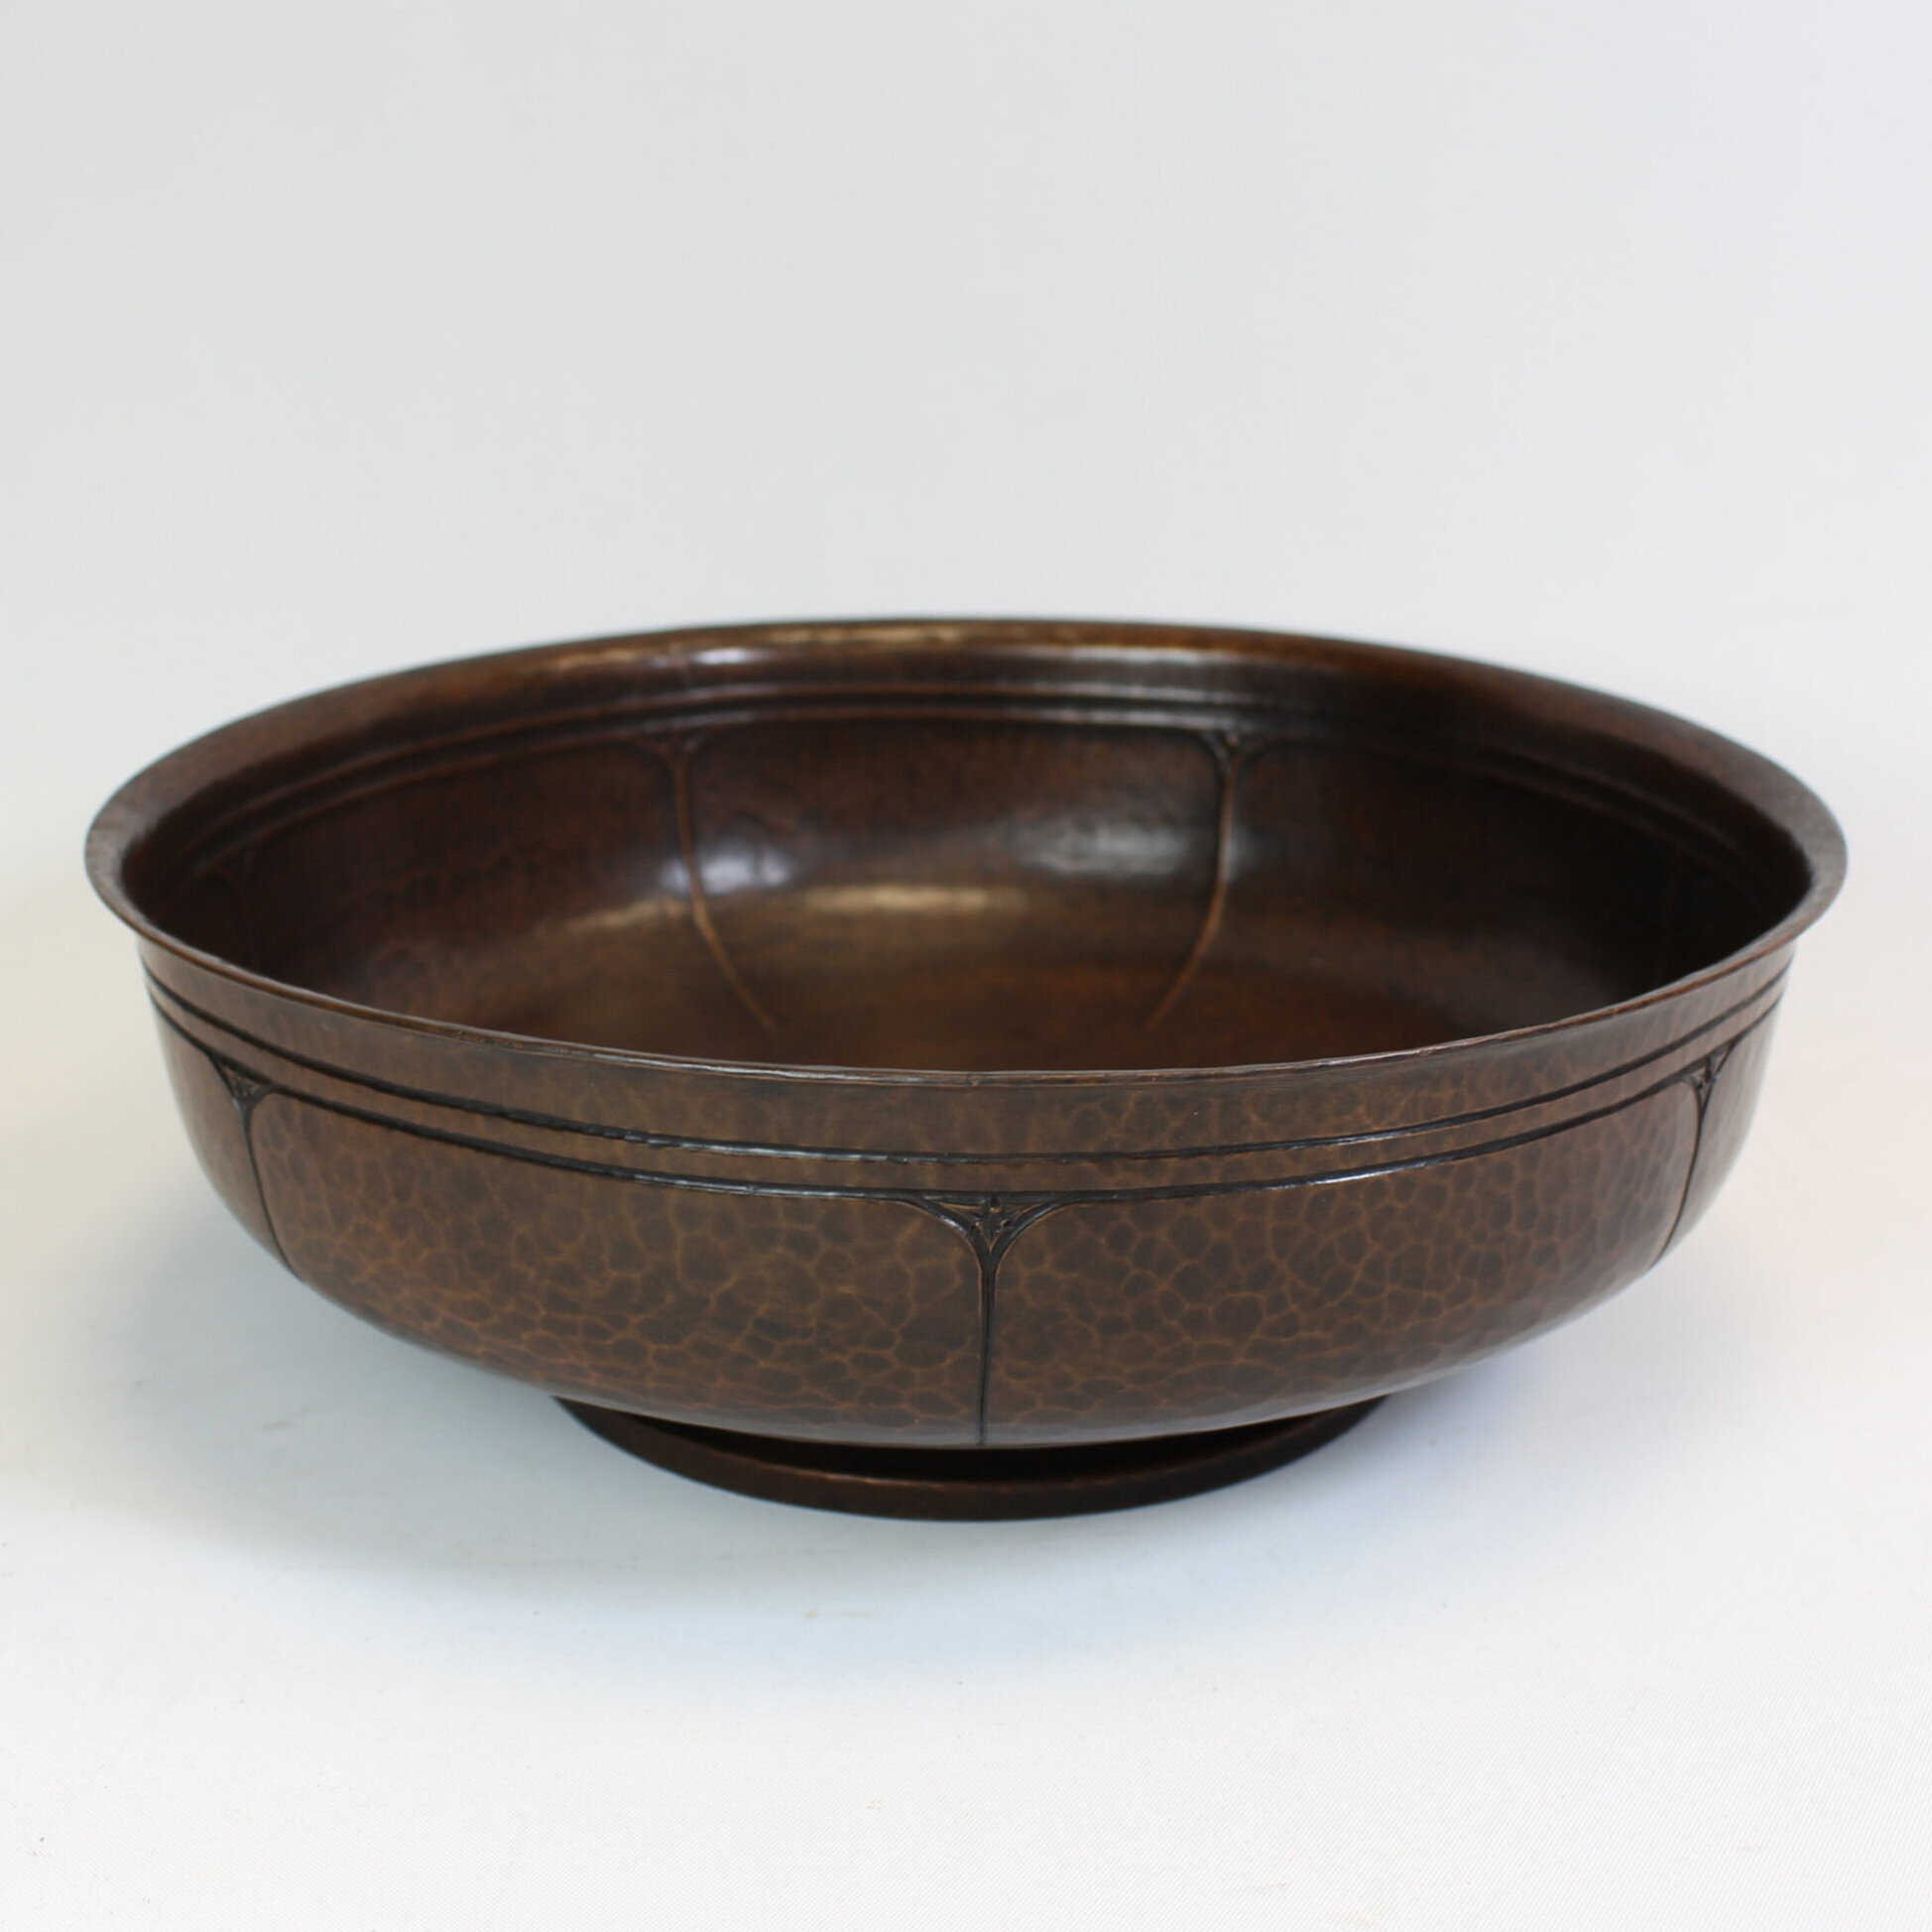 Roycroft Tooled Copper Fruit Bowl